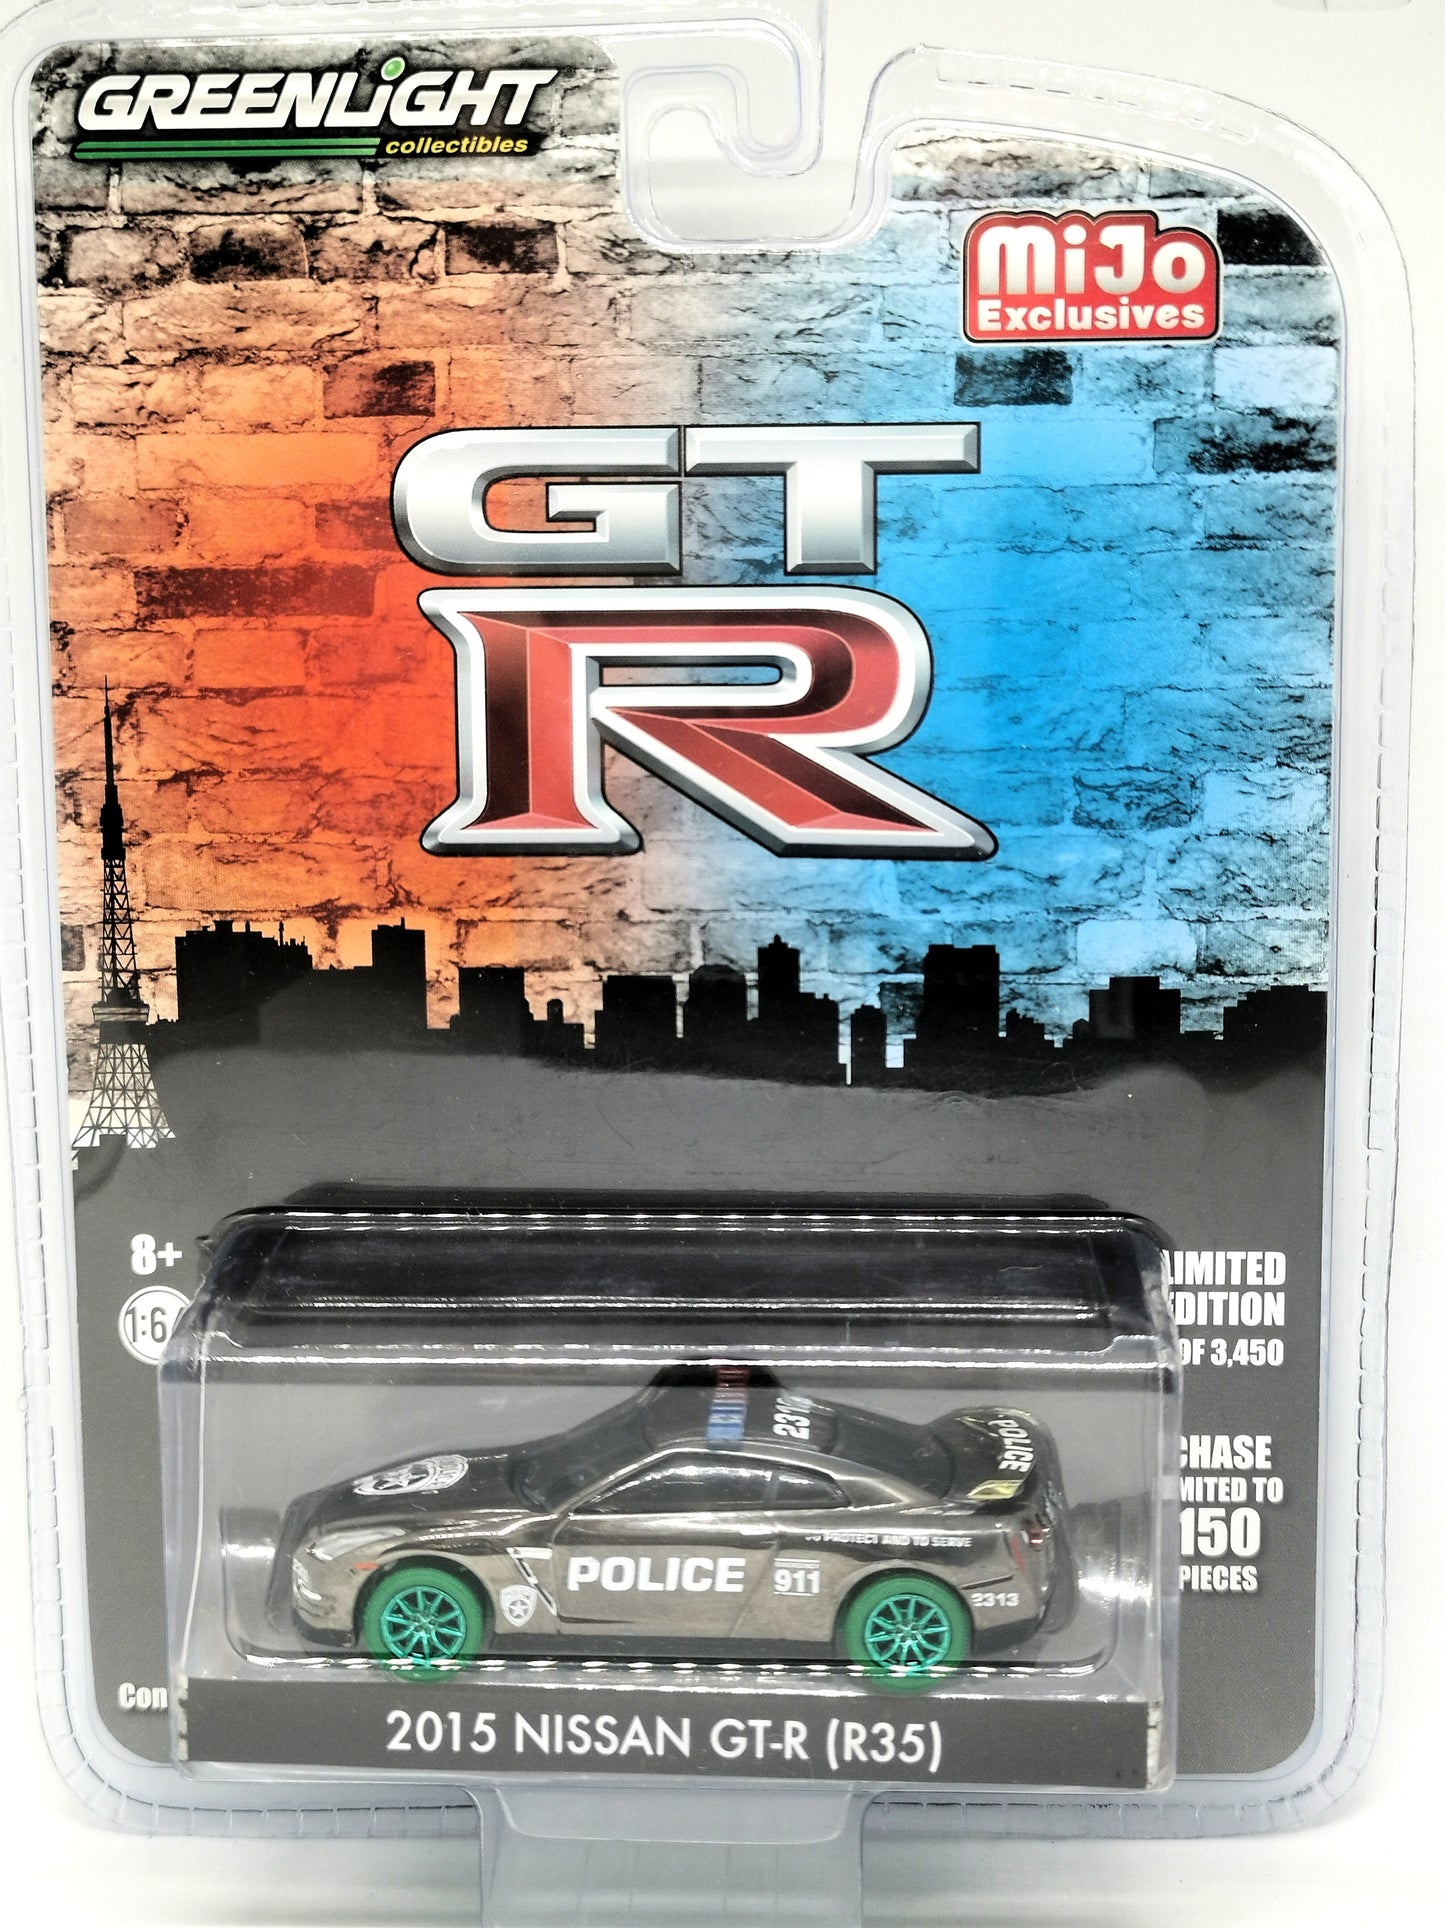 Tarmacworks X GreenLight x Mijo
1:64 Scale
Police Car Nissan GT-R Chase Car